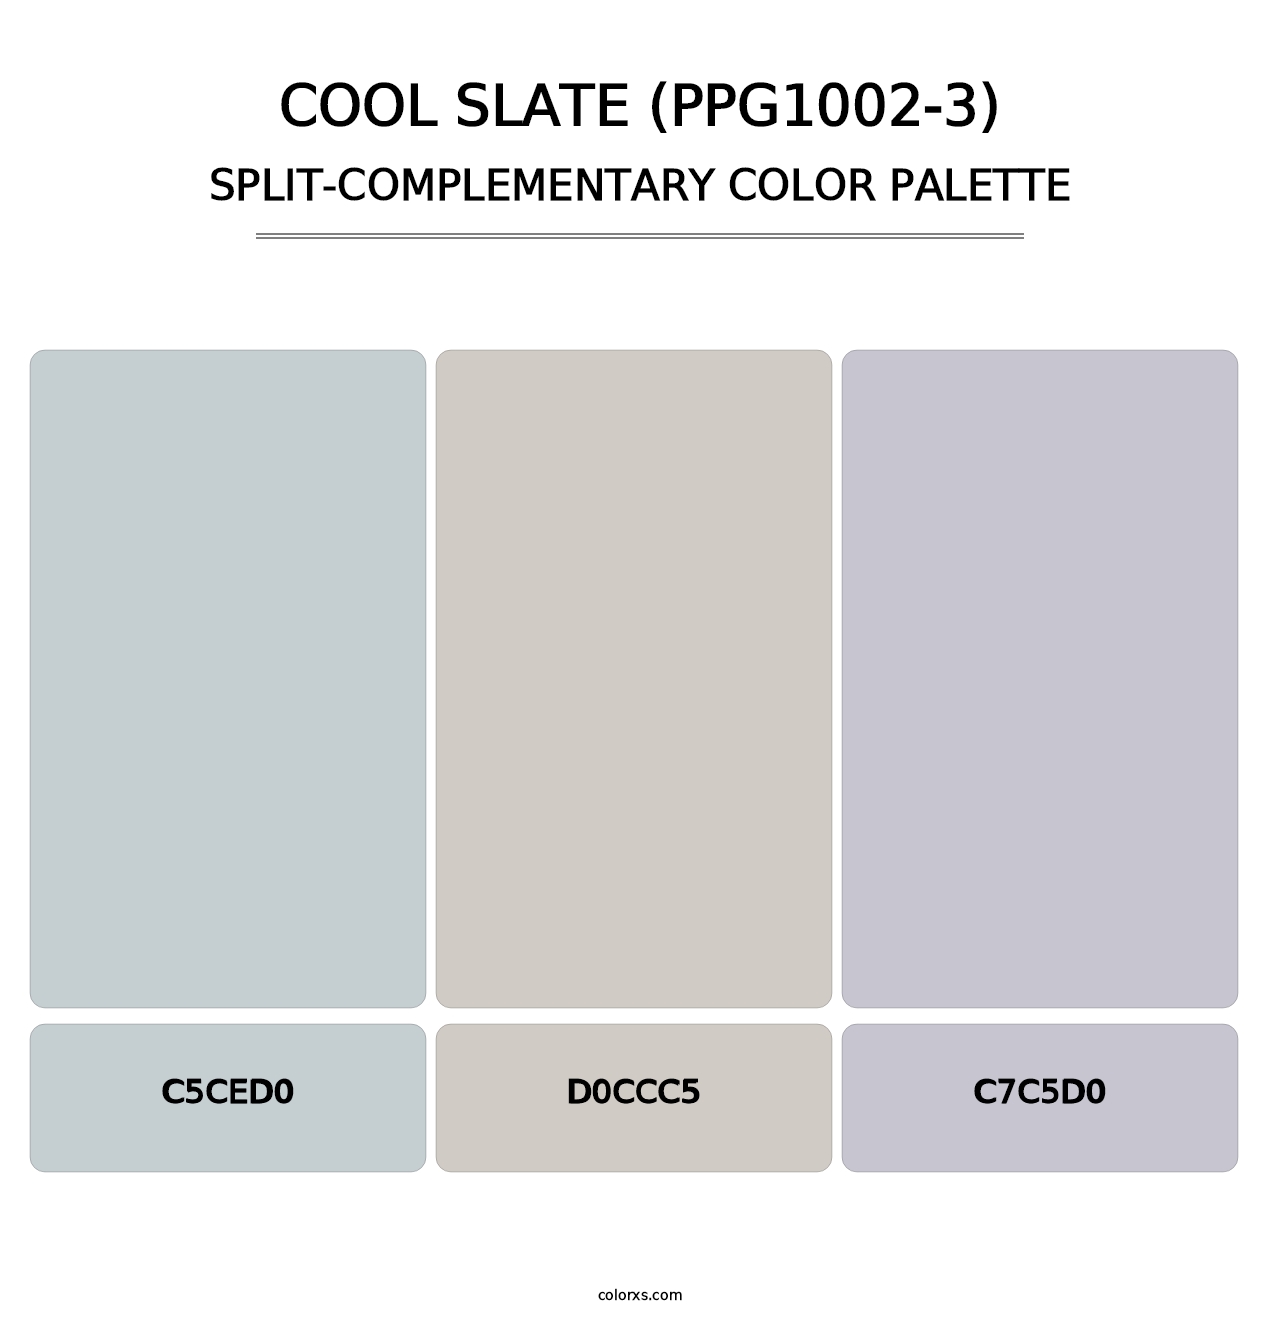 Cool Slate (PPG1002-3) - Split-Complementary Color Palette